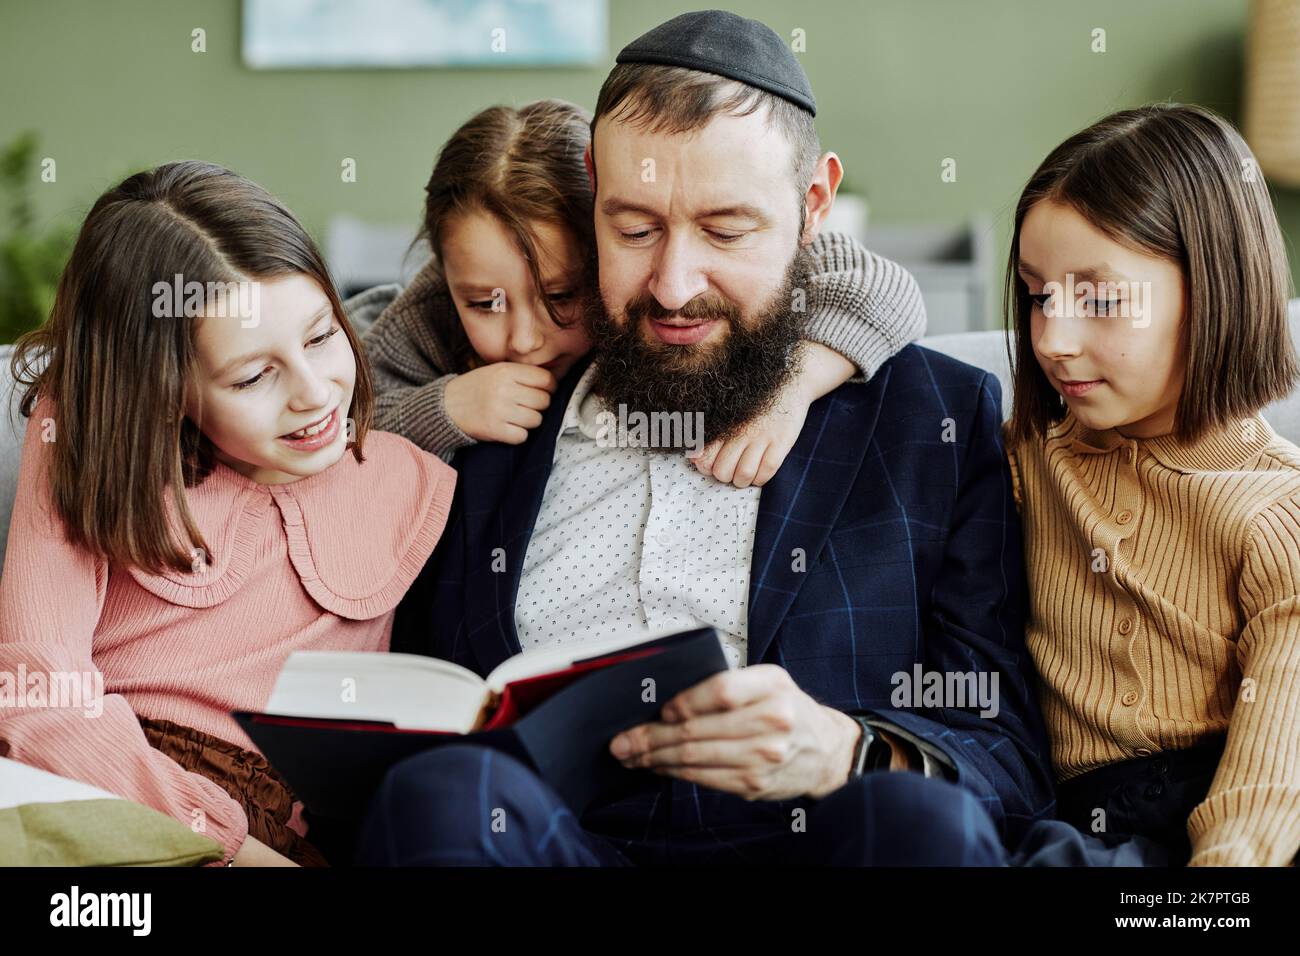 Portrait of orthodox Jewish man wearing kippah while reading book to three children Stock Photo